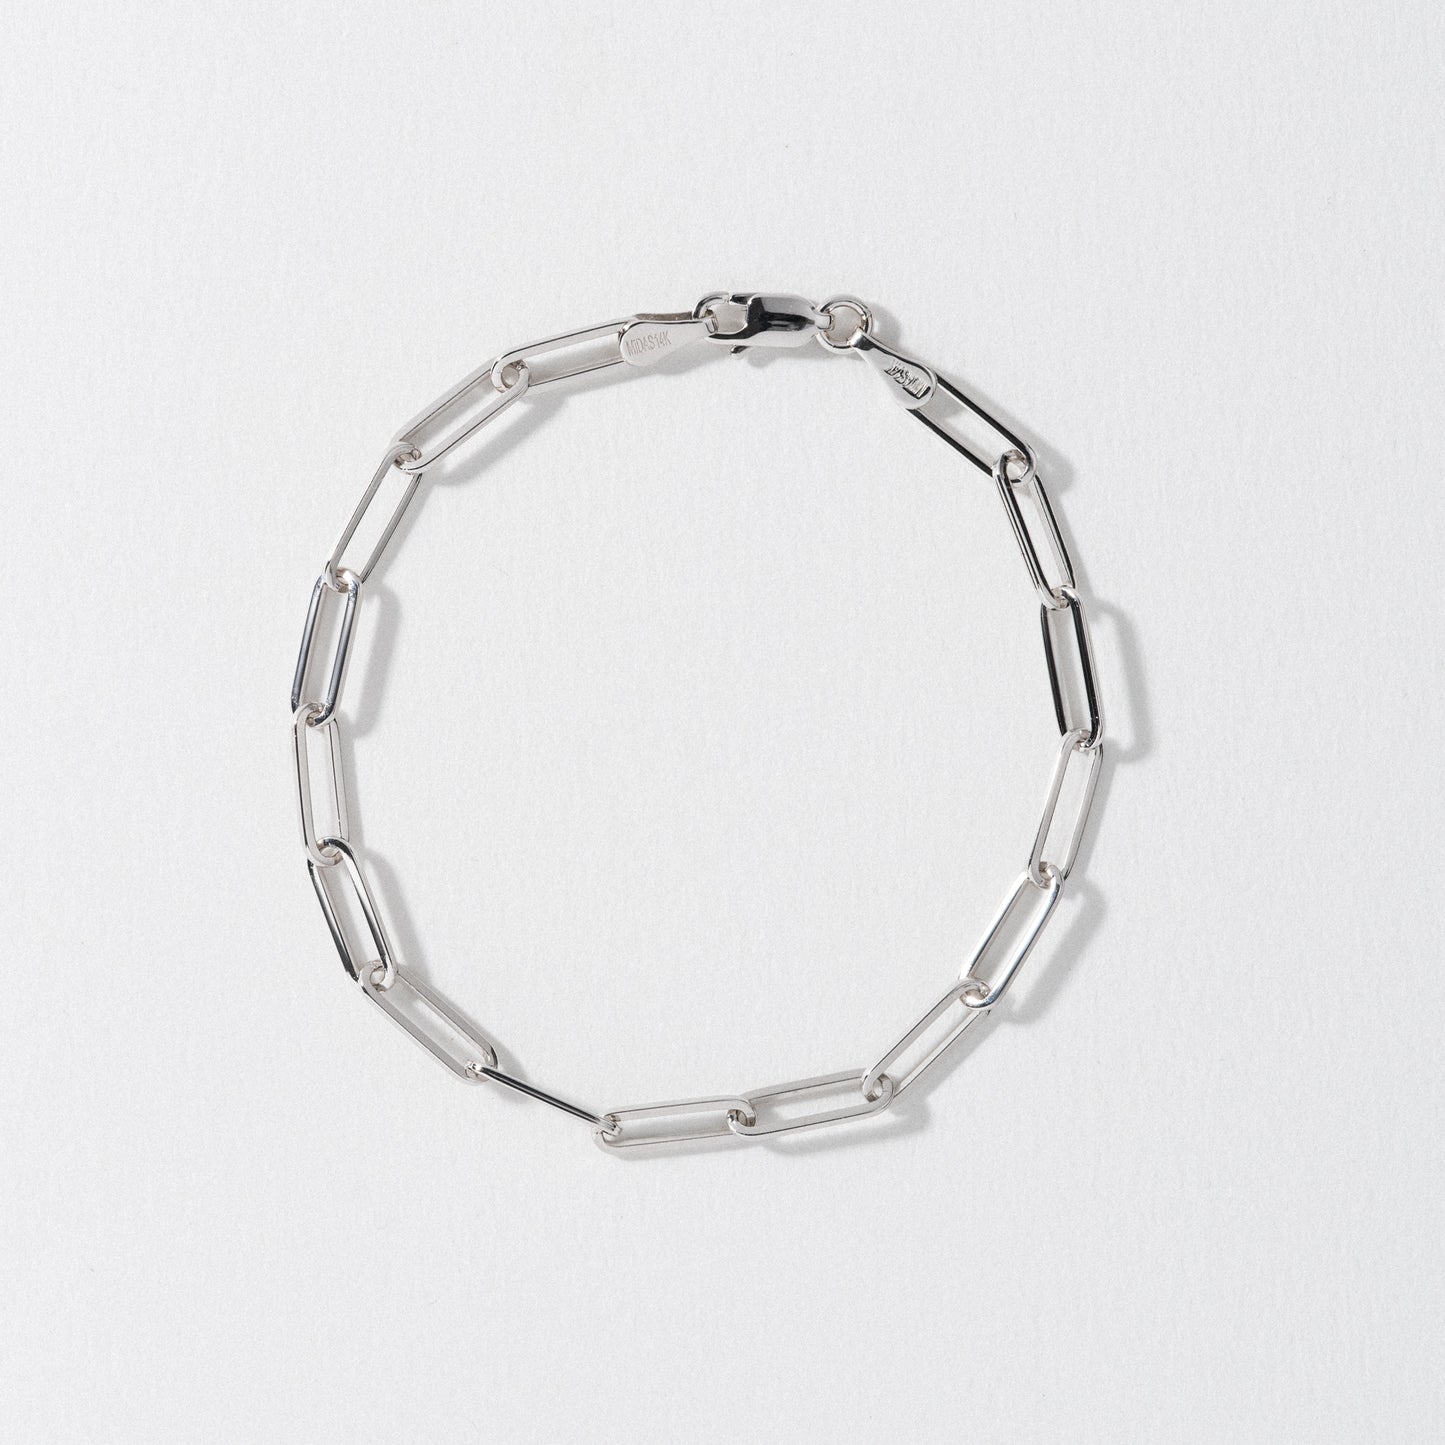 White Gold Chain Link Bracelet - Polished 3.85mm